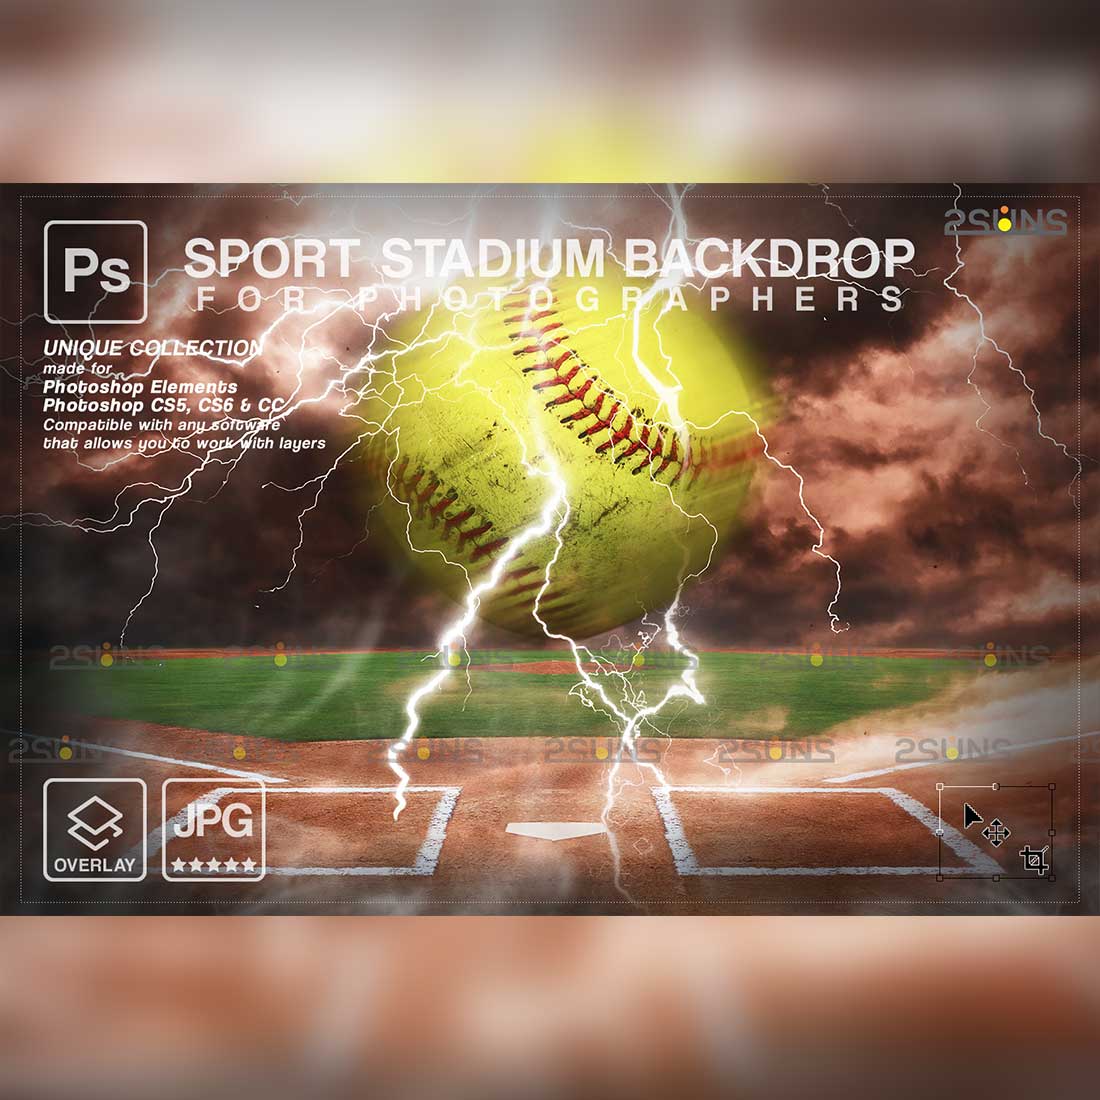 Modern Softball Backdrop Sports Digital Photoshop Overlay Preview Image.